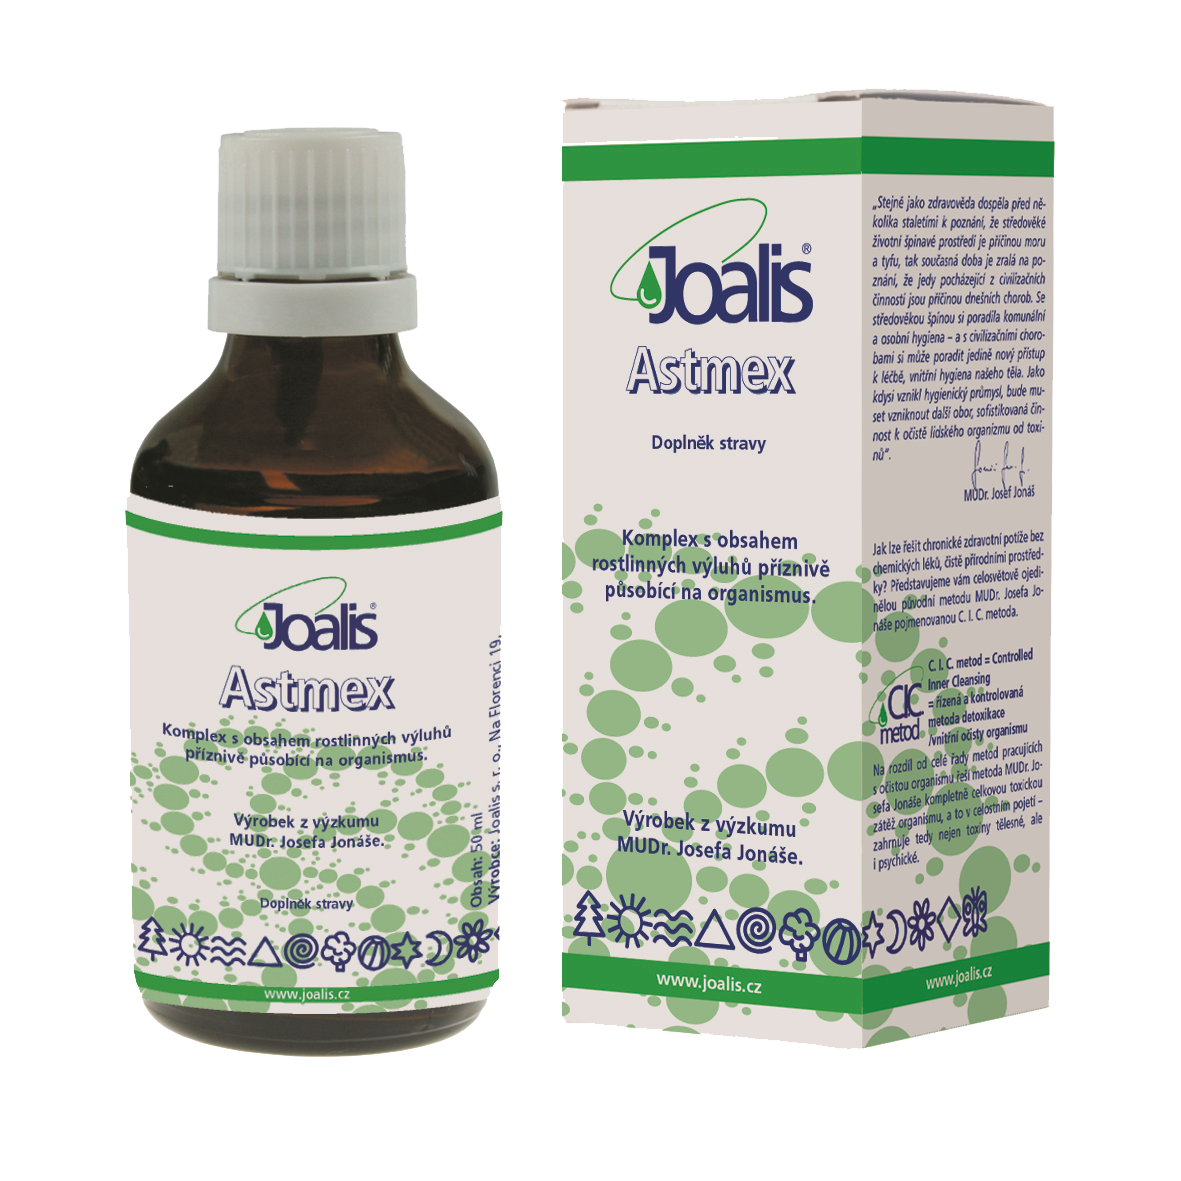 Astex (Astmex)